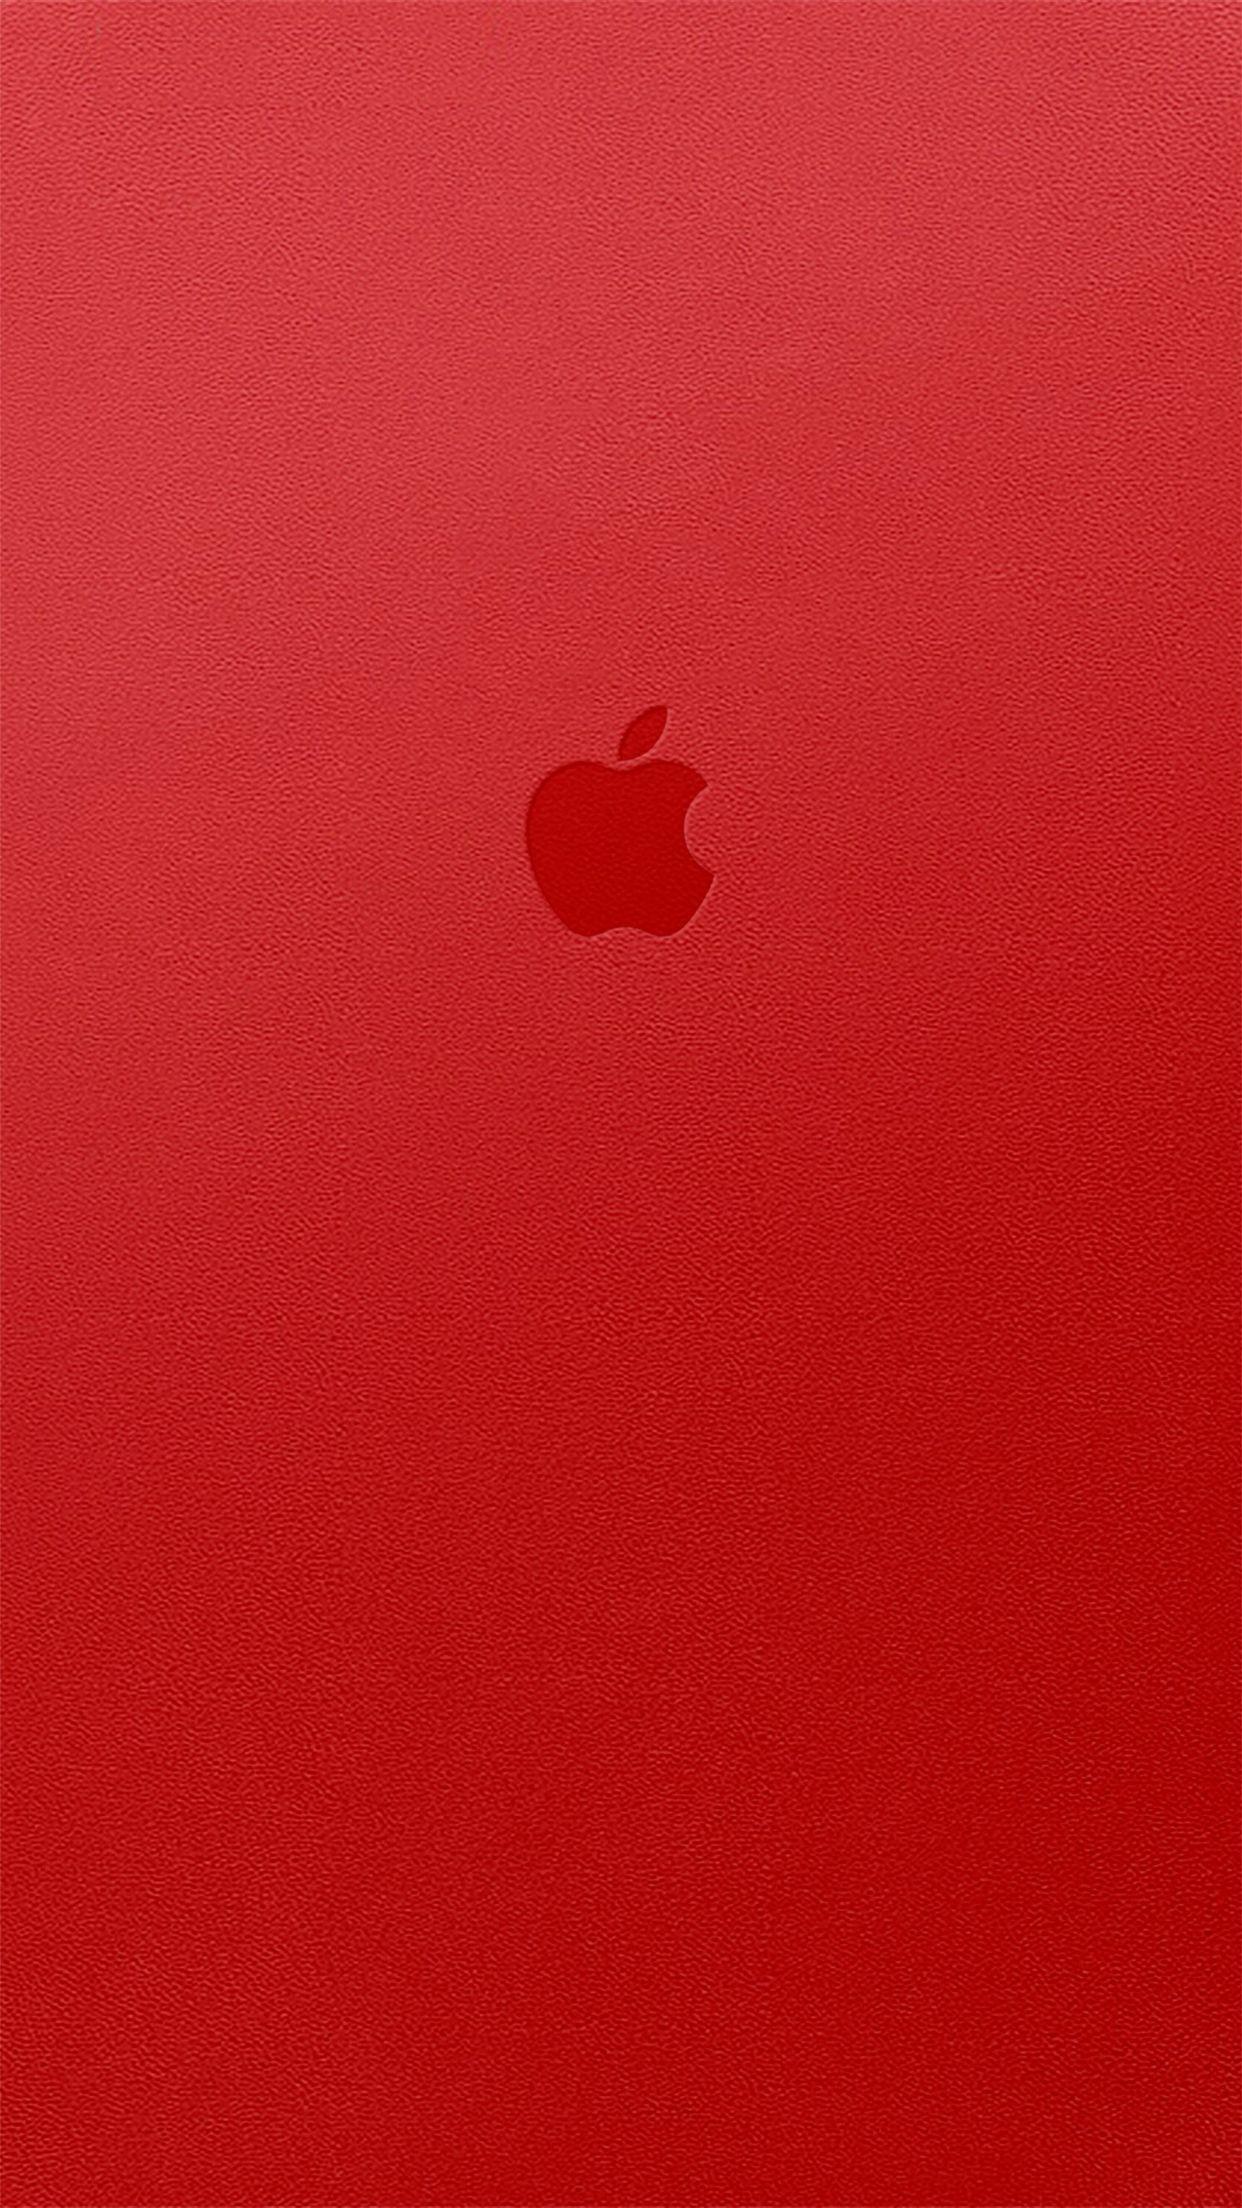 Apple iPhone 6s Plus wallpaper red. iphone 6 wallpaper